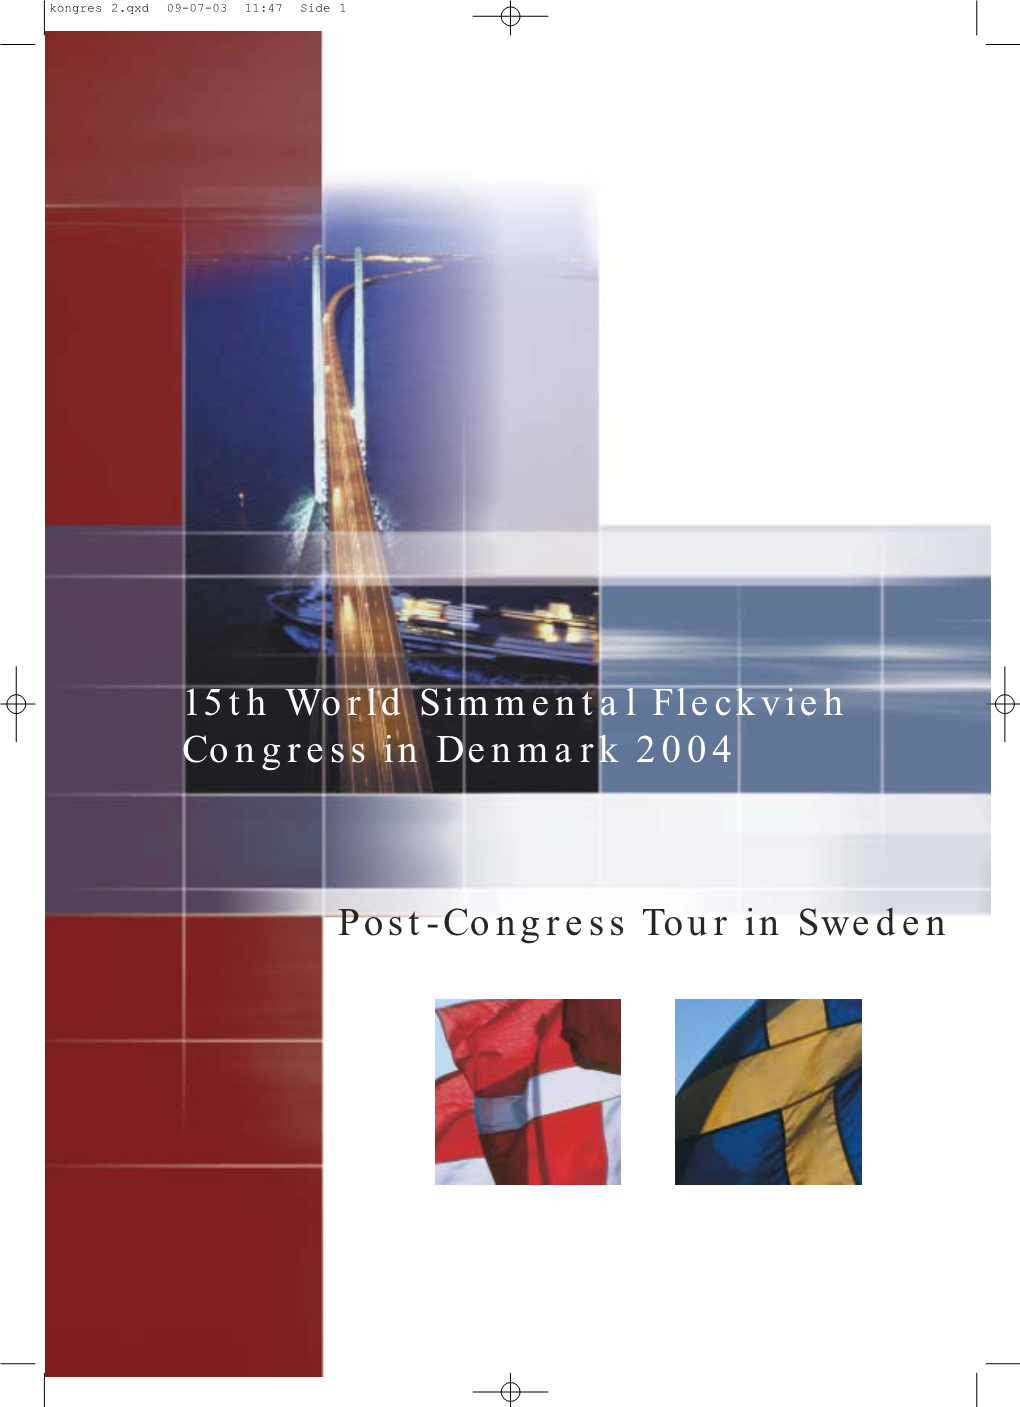 15Th World Simmental Fleckvieh Congress in Denmark 2004